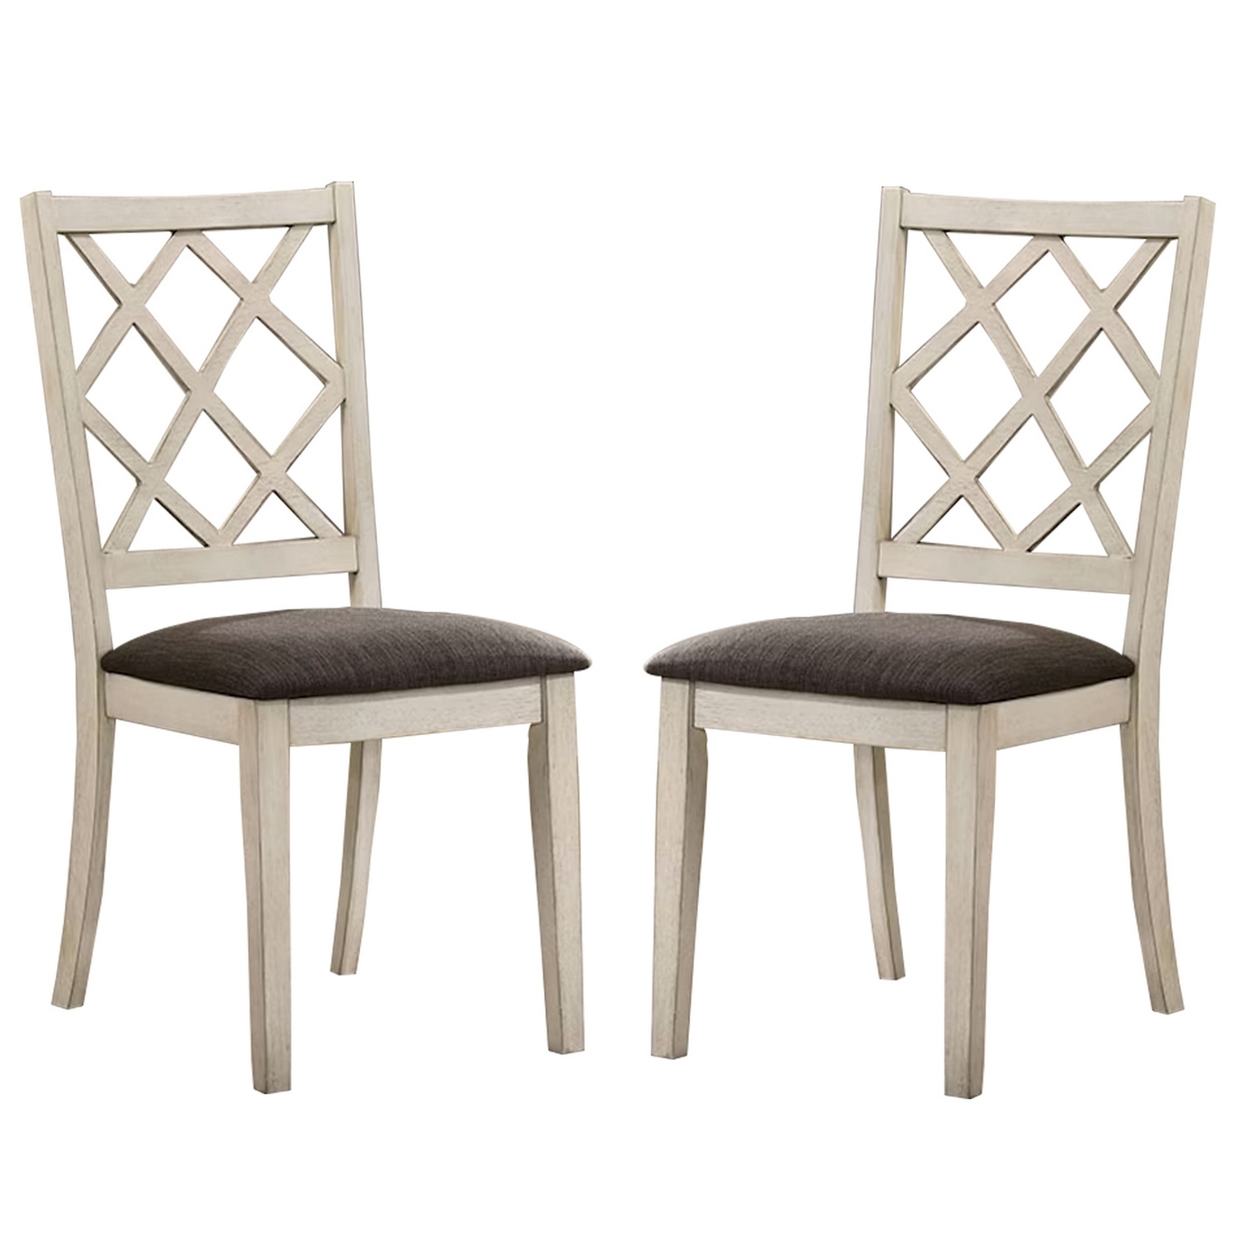 Ara 18 Inch Dining Chair, Set Of 2, Crossbuck Back, White Wood, Gray Fabric- Saltoro Sherpi